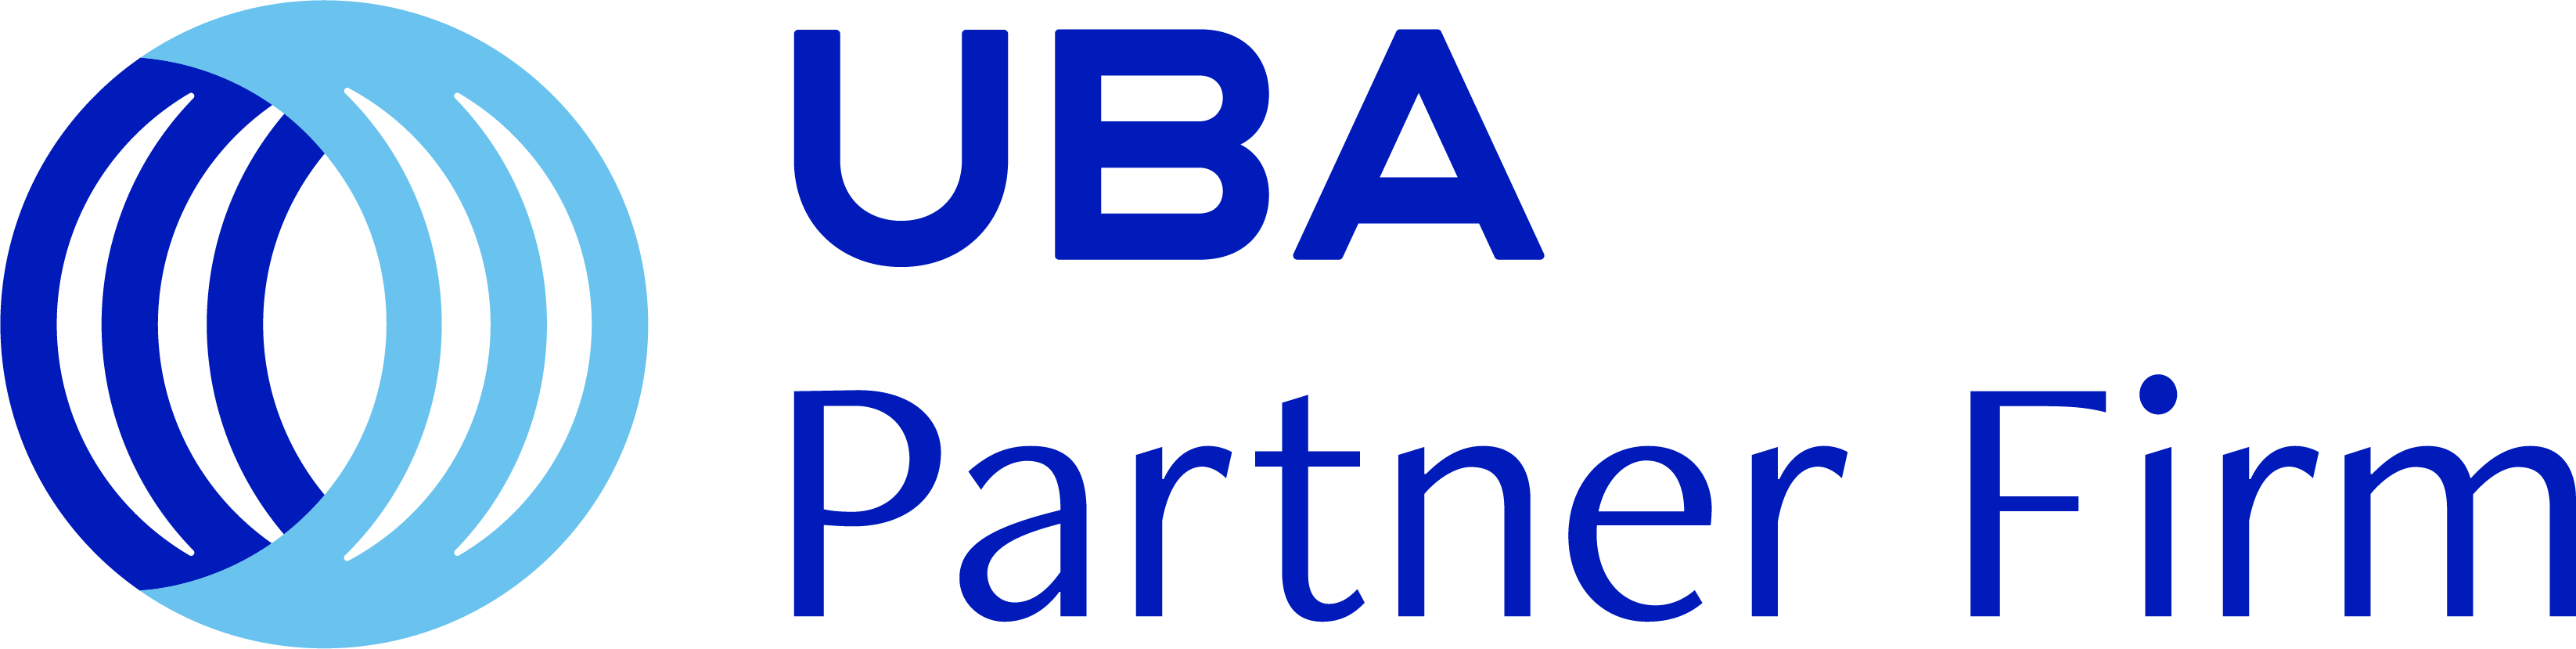 UBA Partner Firm